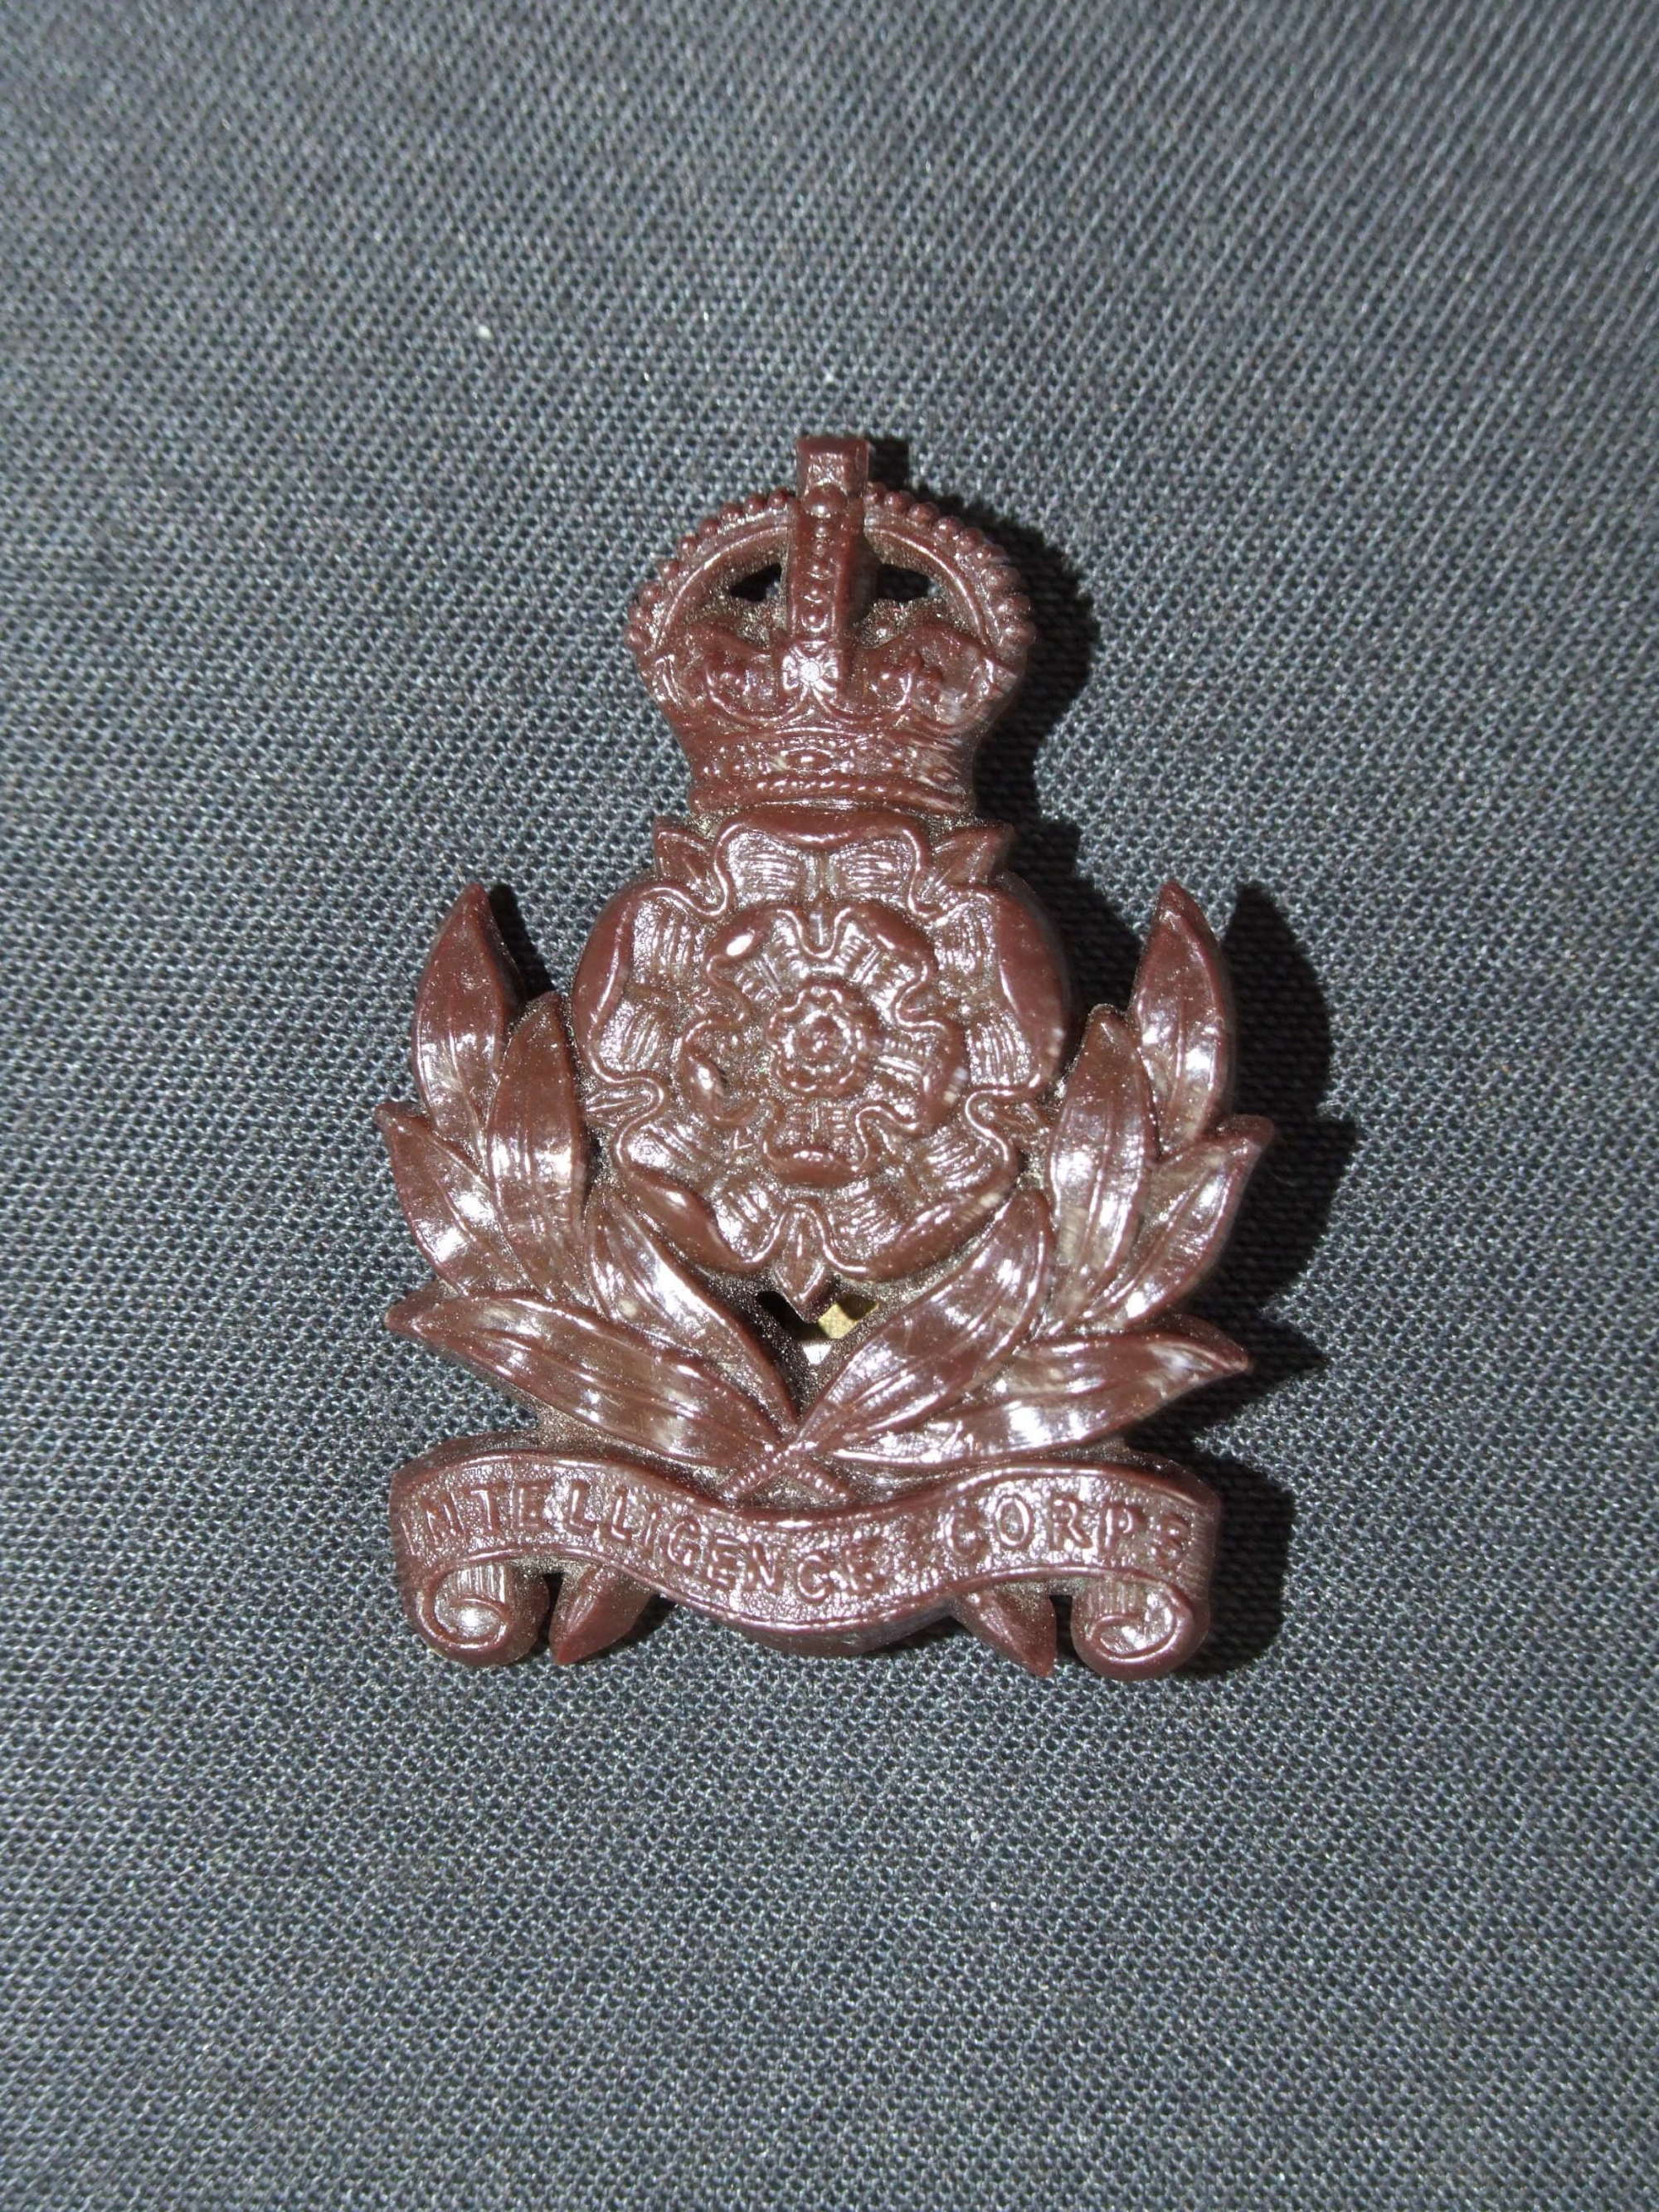 Intelligence Corps Plastic Economy Cap badge